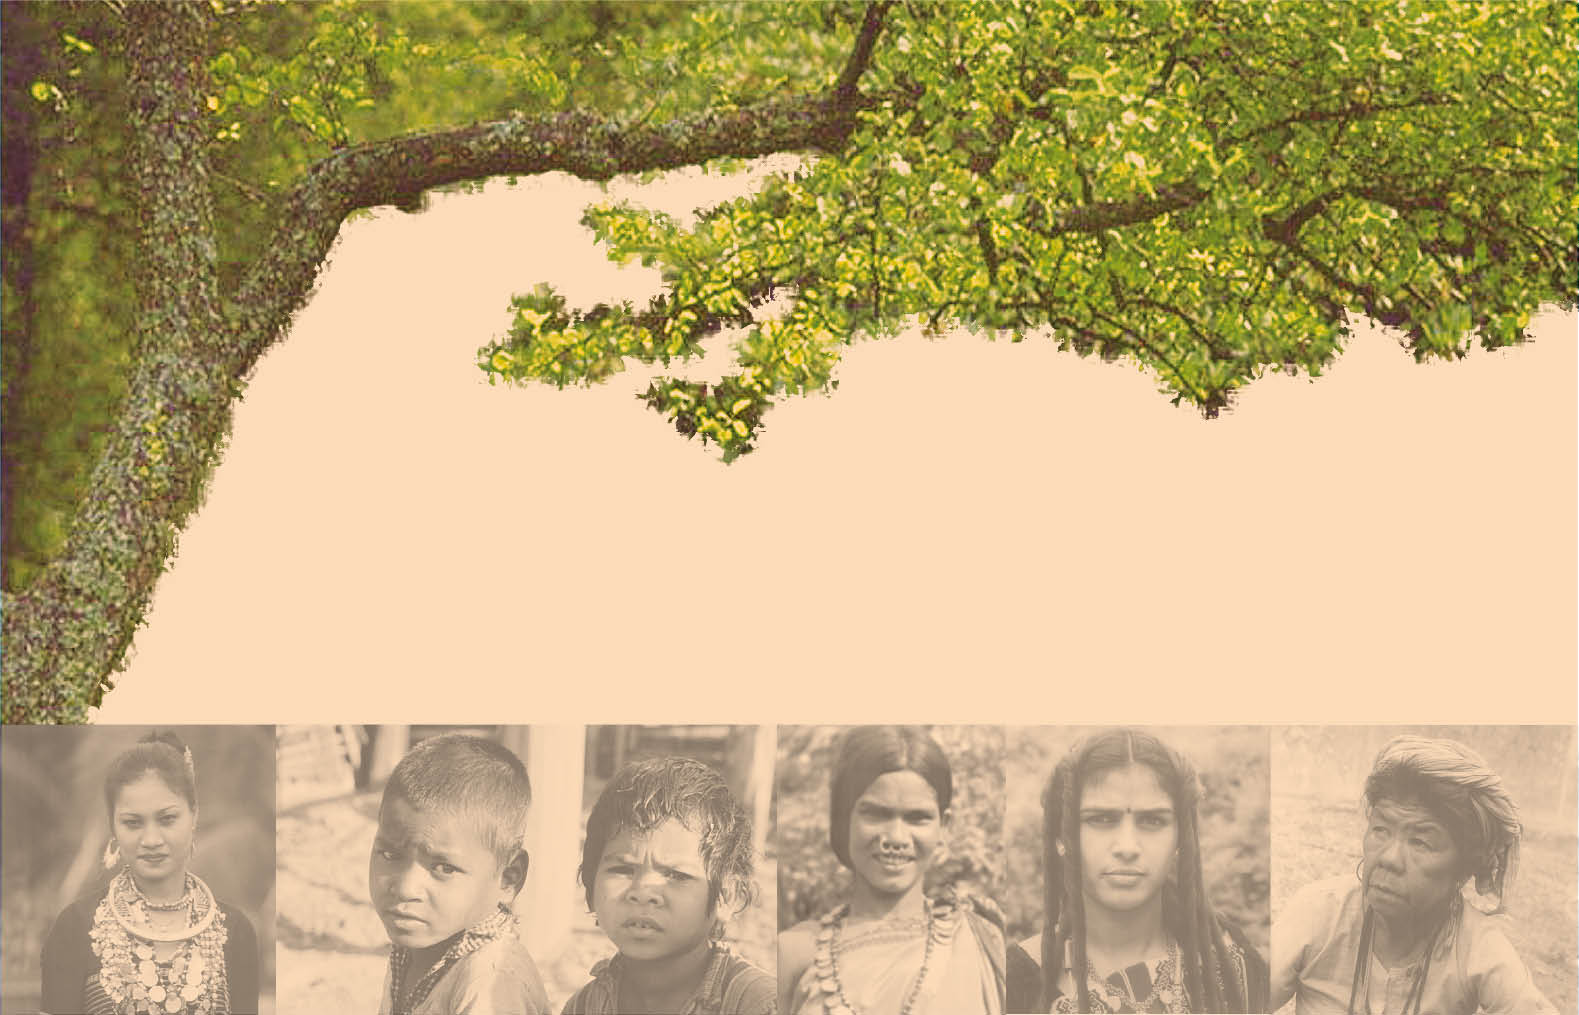 Primitive Tribal Groups